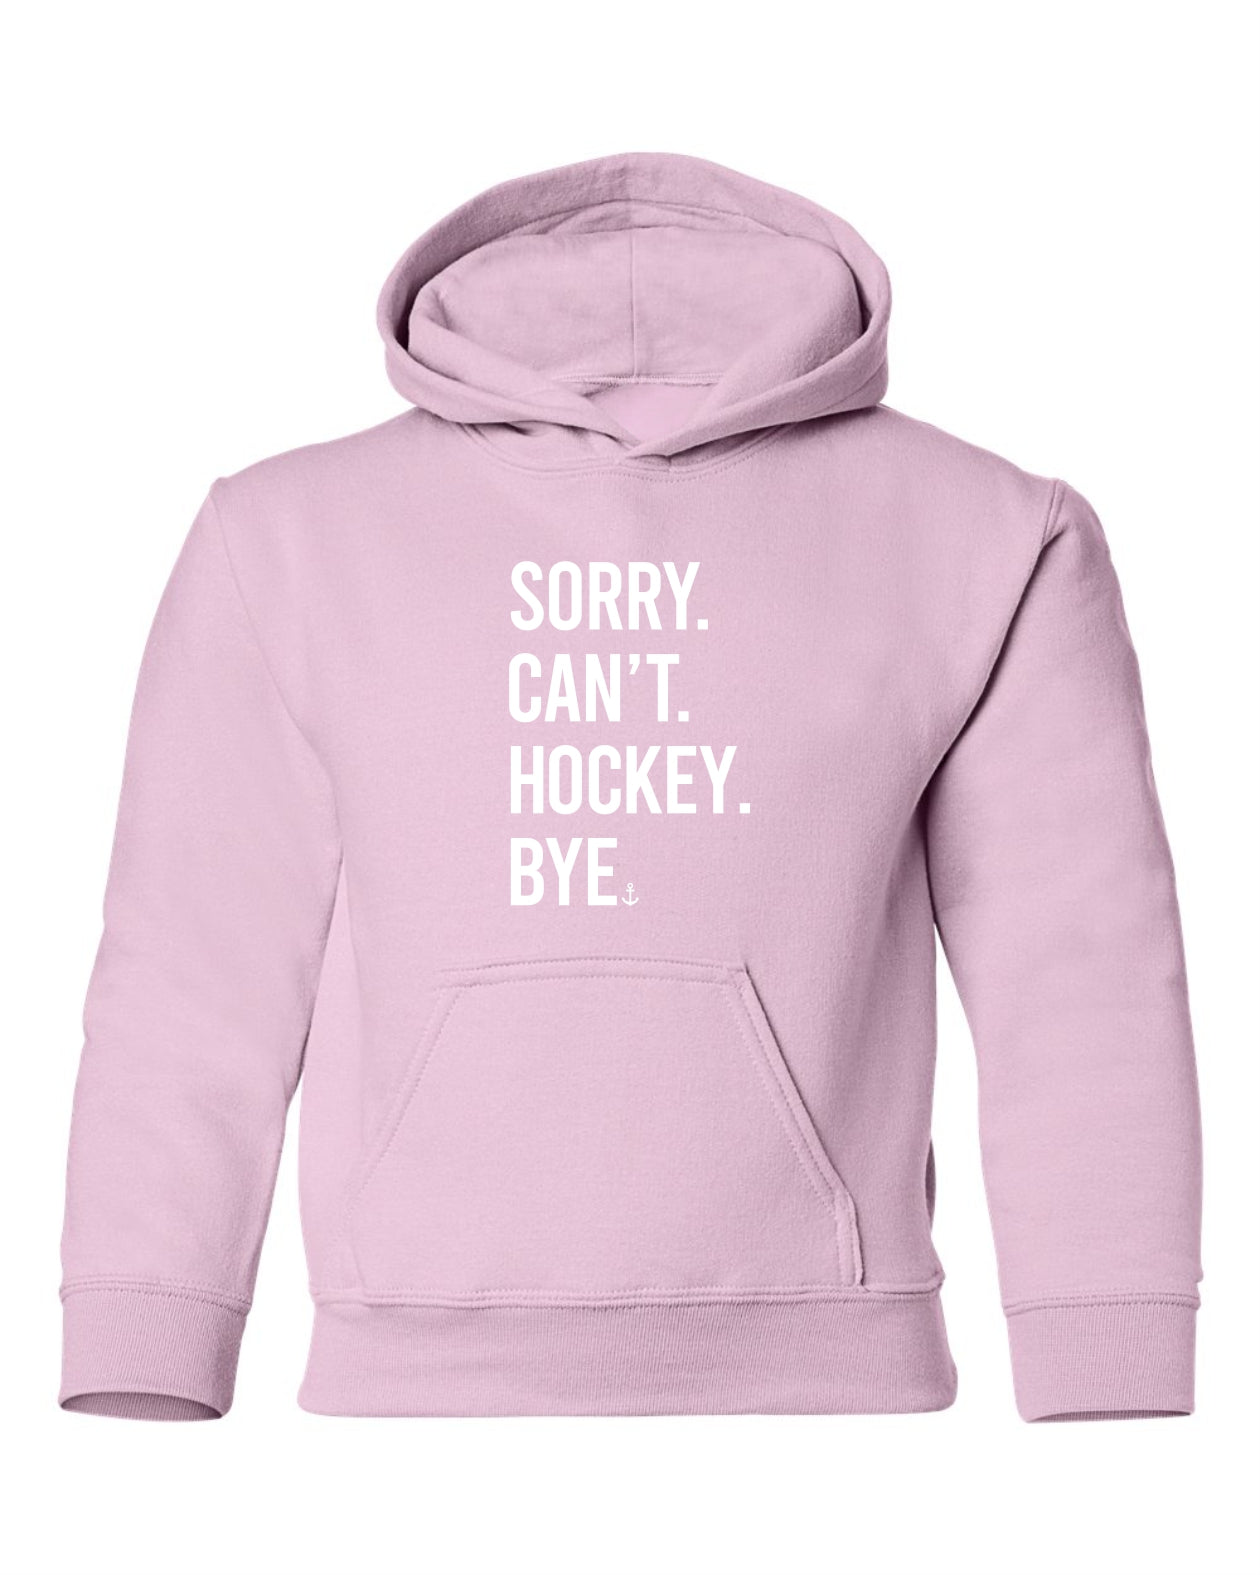 "Sorry. Can't. Hockey. Bye." Youth Hoodie